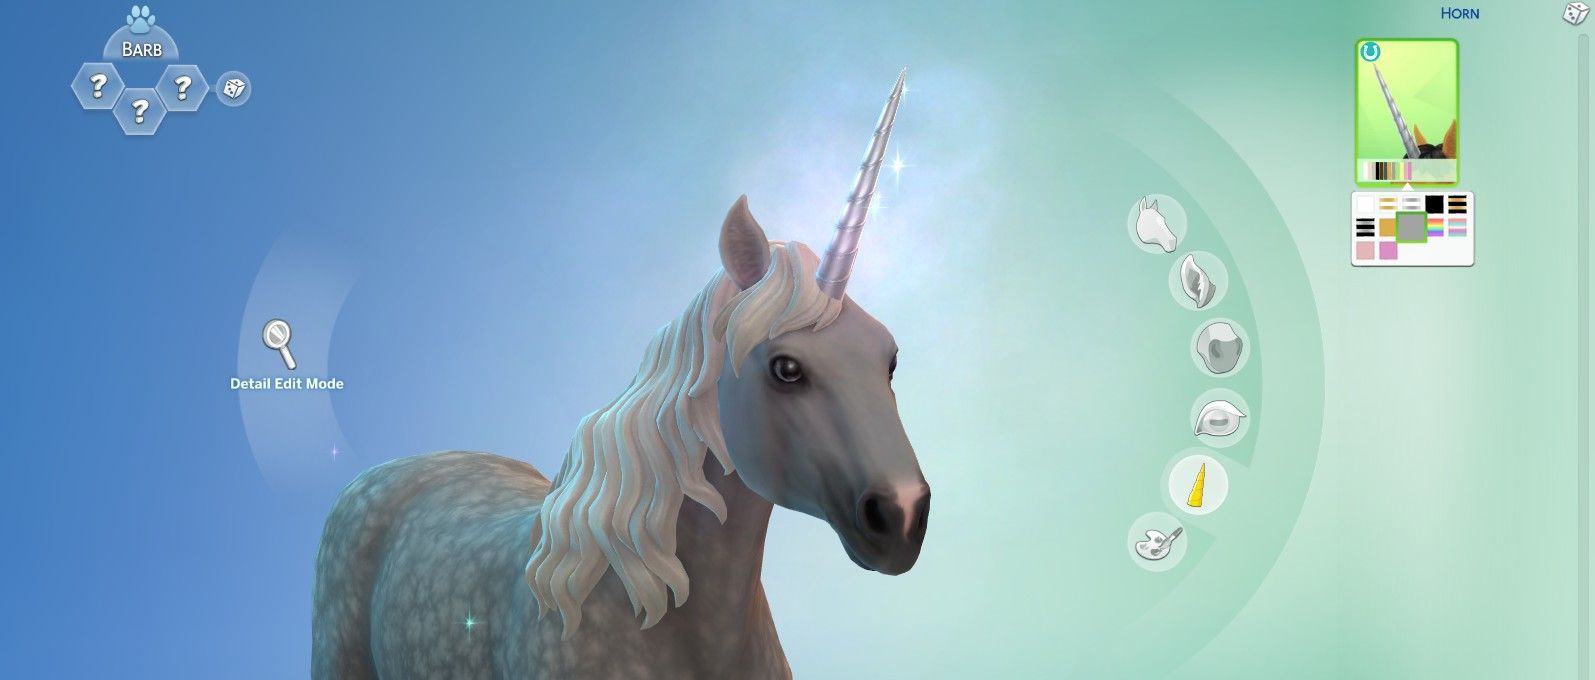 sims 4 create a sim unicorn horn cas